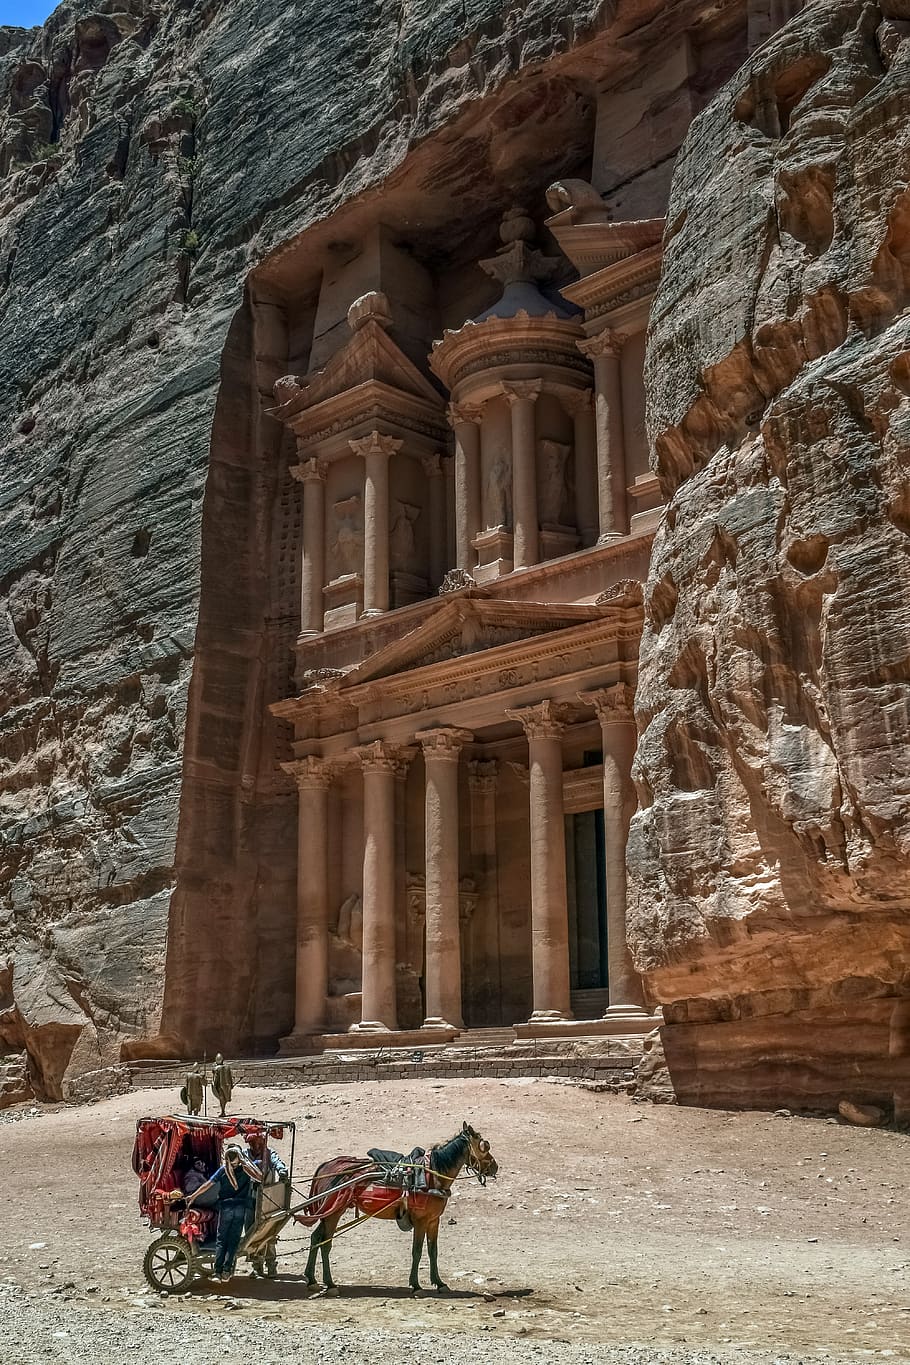 petra, jordan, treasury, ancient, monument, architecture, landmark, desert, tourism, culture